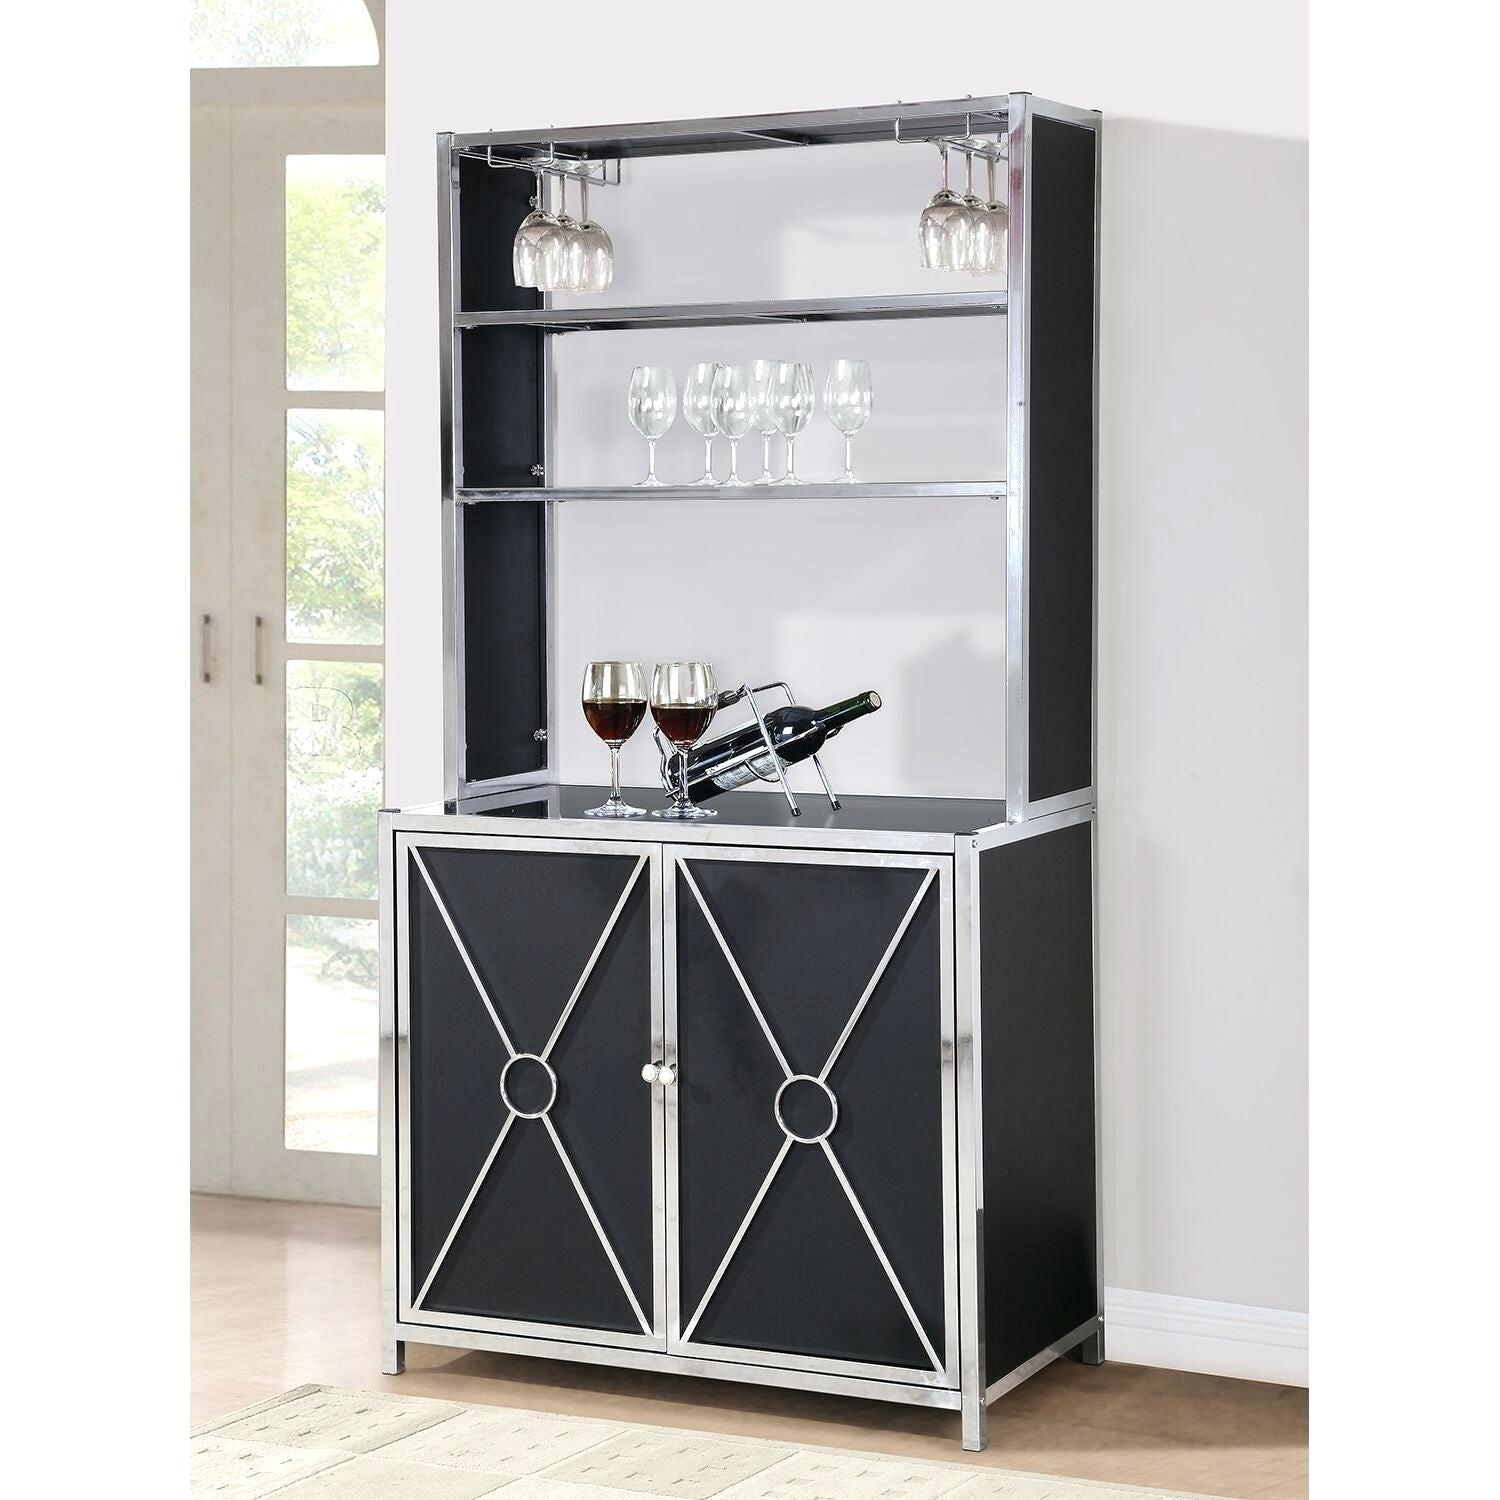 Home Goods Bar Cabinet Kitchenaid Mixer Good Looking Small regarding sizing 1500 X 1500